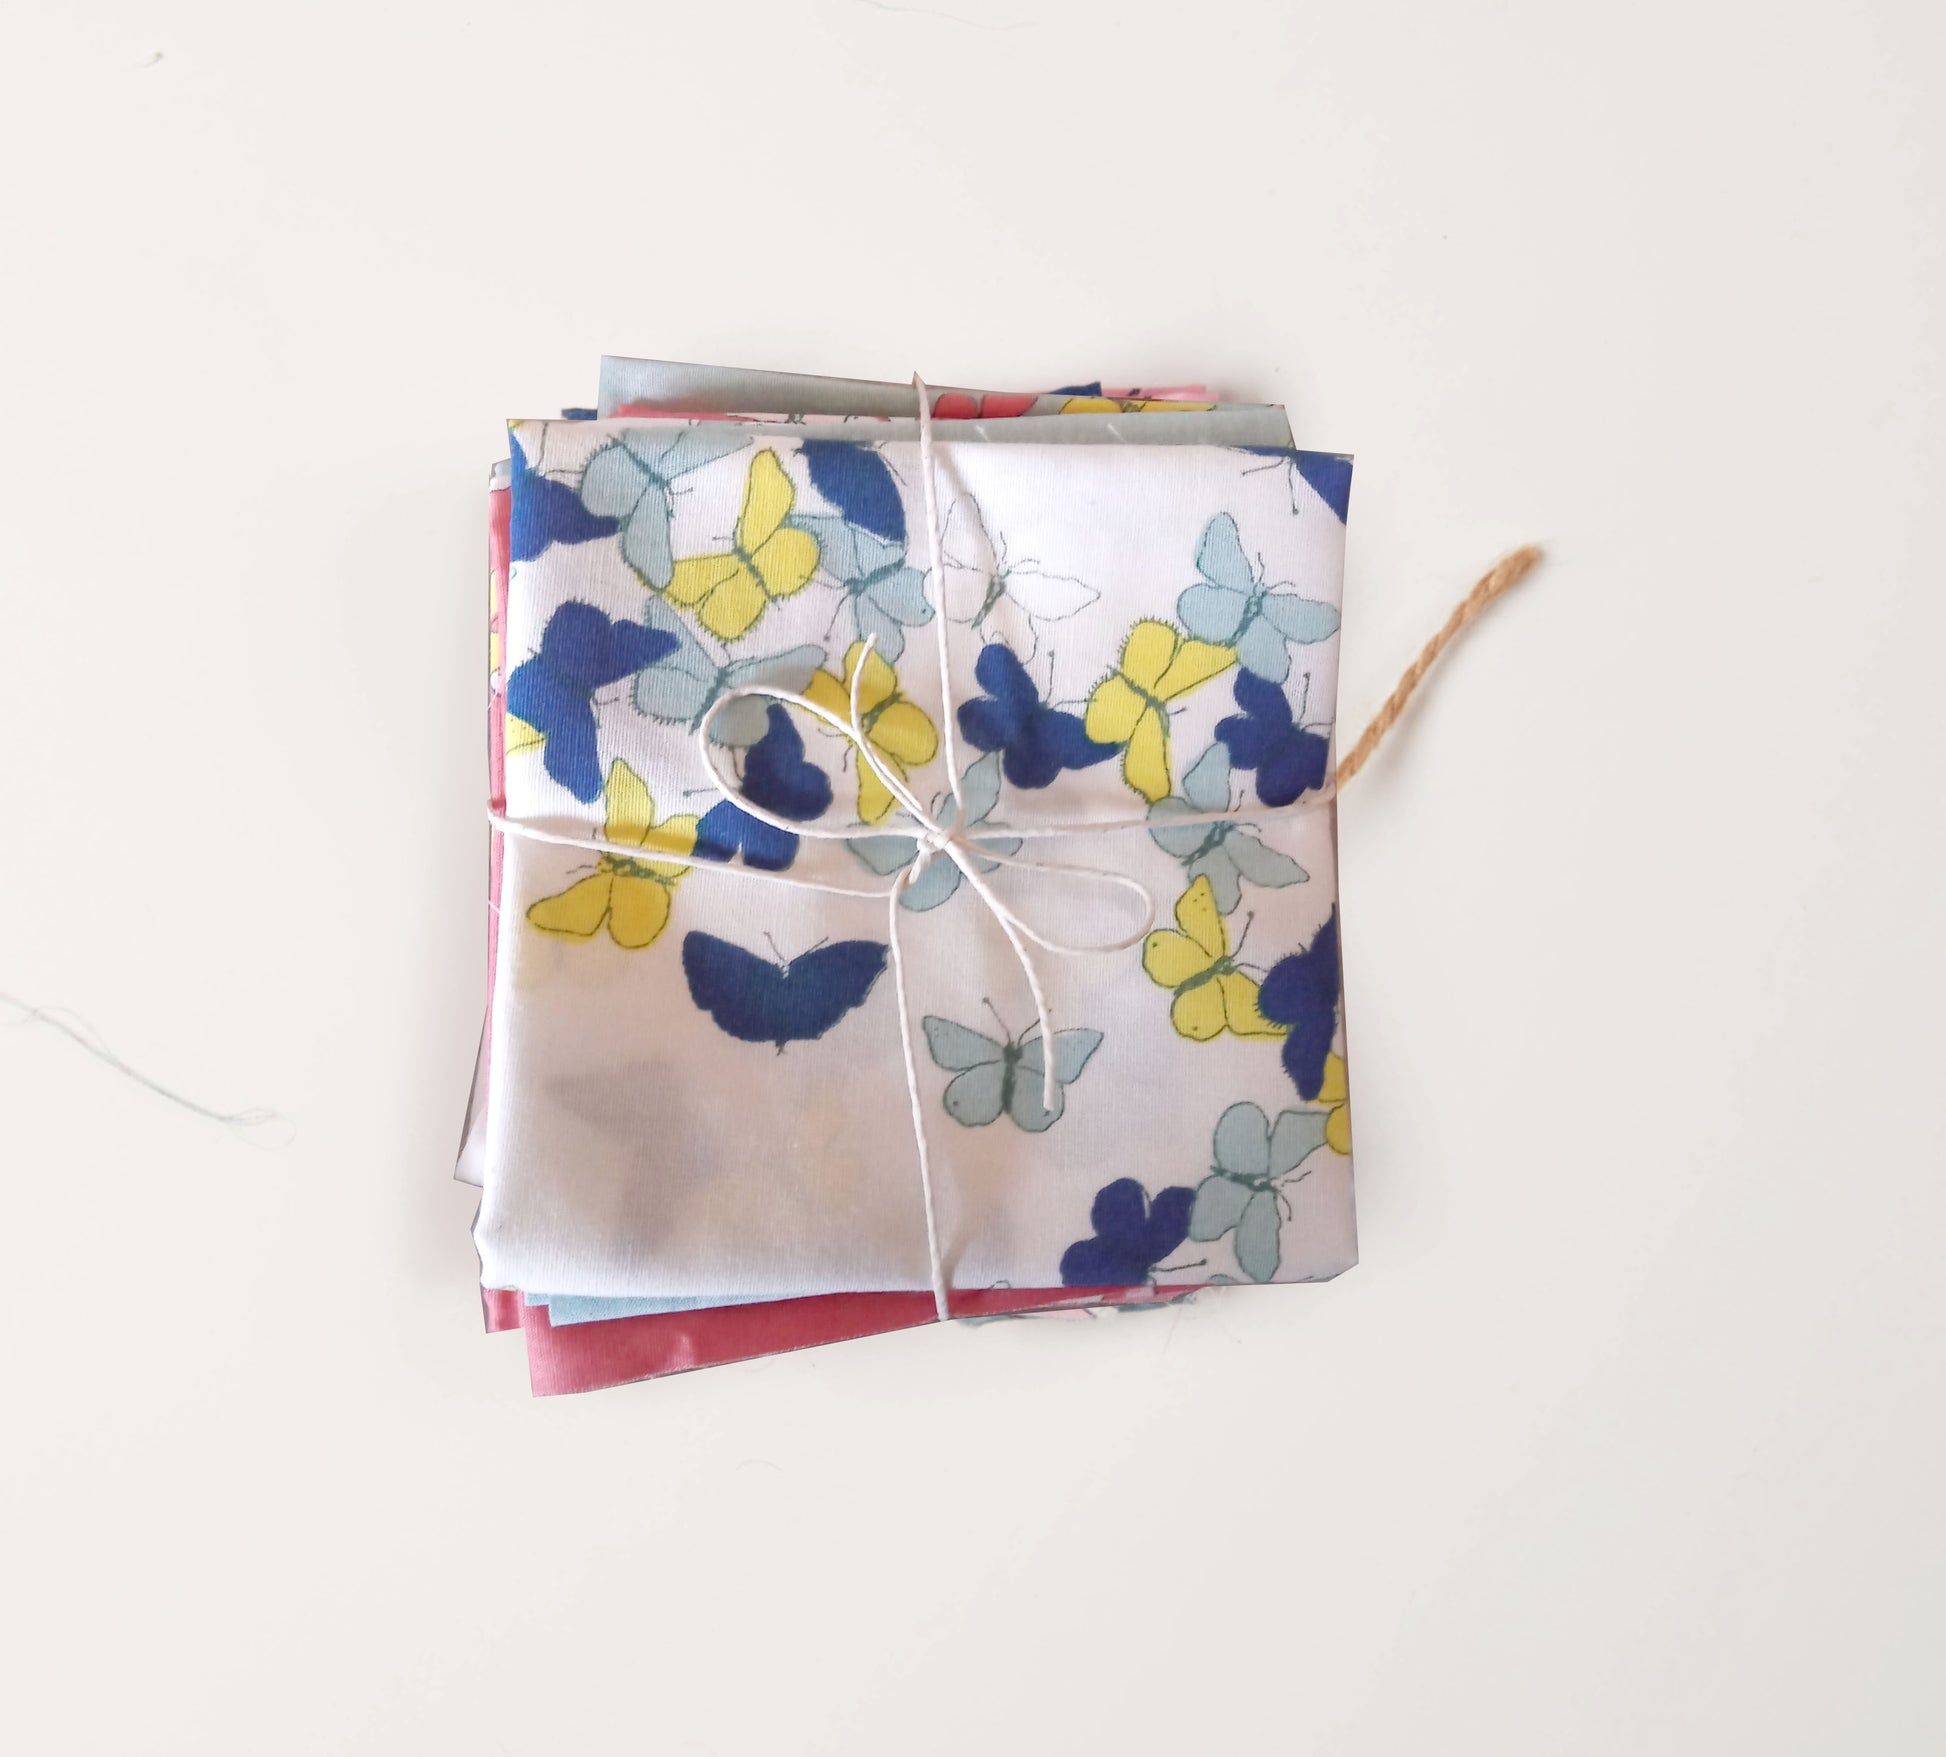 Fabric Remnants Bundle with Butterflies Prints | Zero Waste